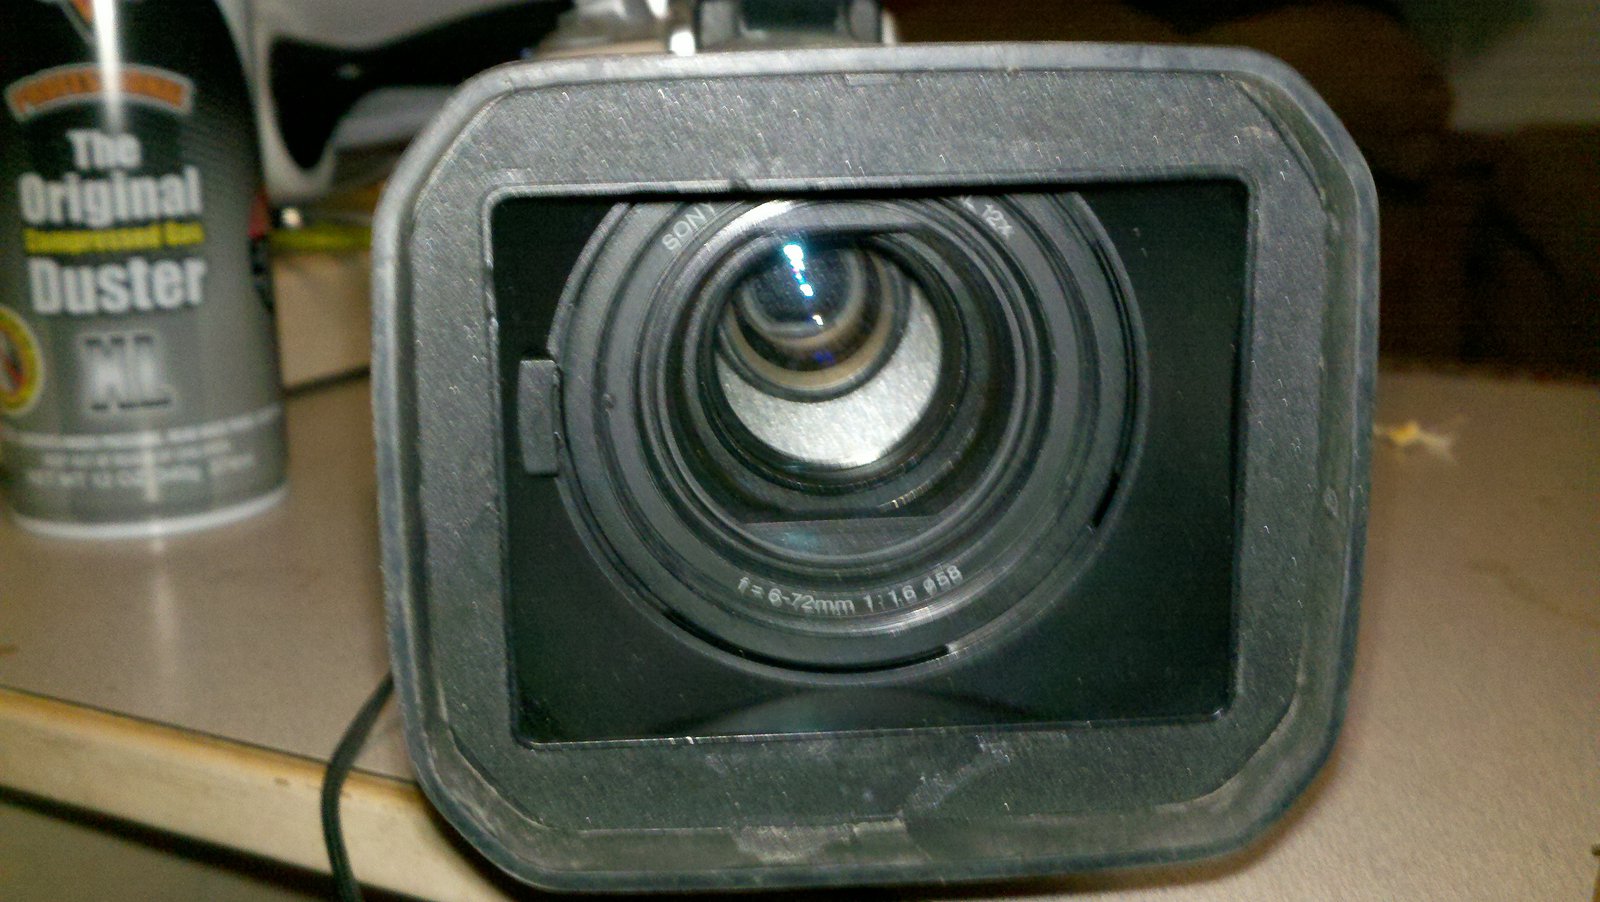 Vx2000 lens for sale